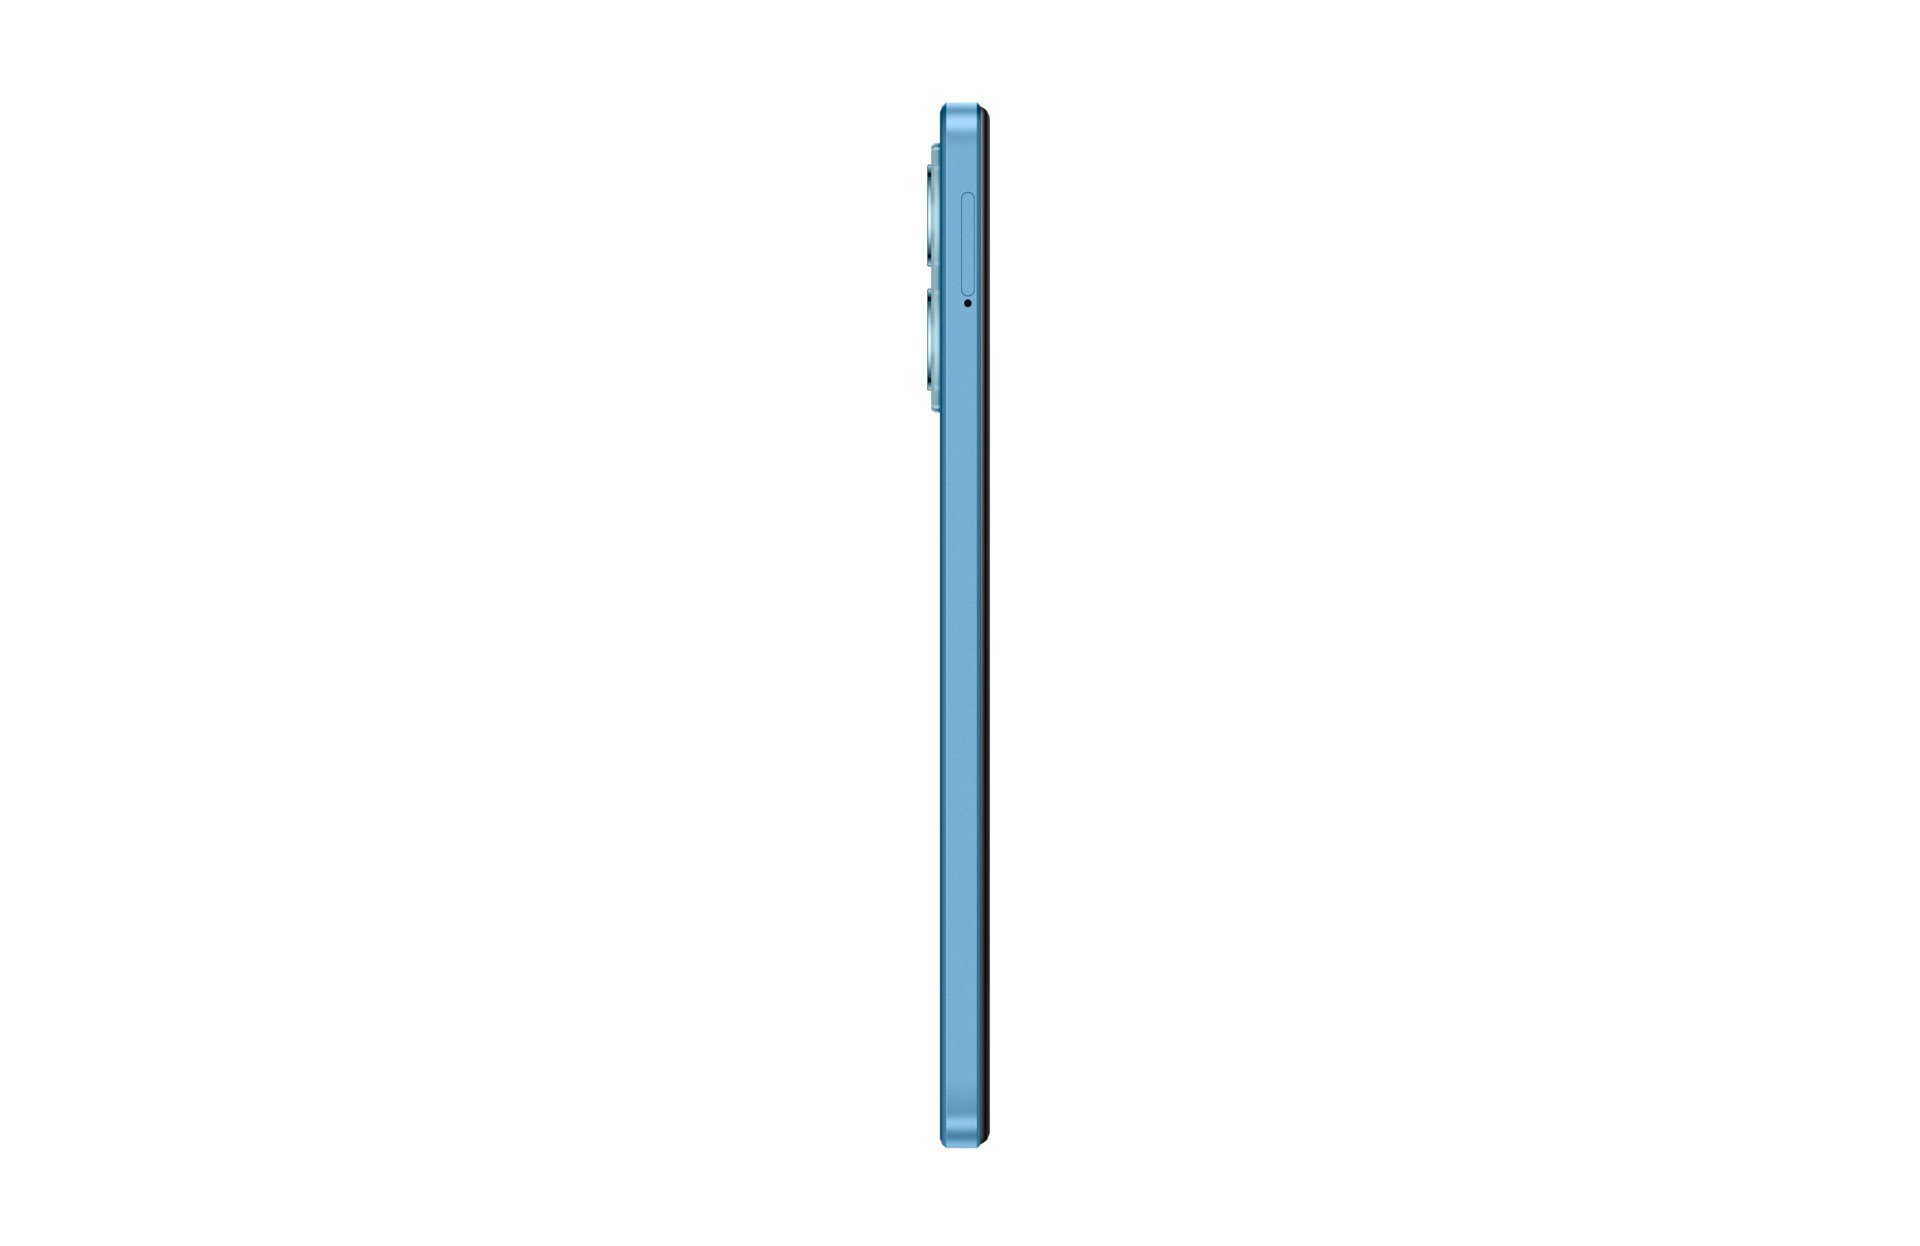 Note 12 Blau Zoll, Xiaomi Speicherplatz, cm/6,67 Kamera) (16,94 128 Smartphone GB MP 4GB+128GB 50 Redmi